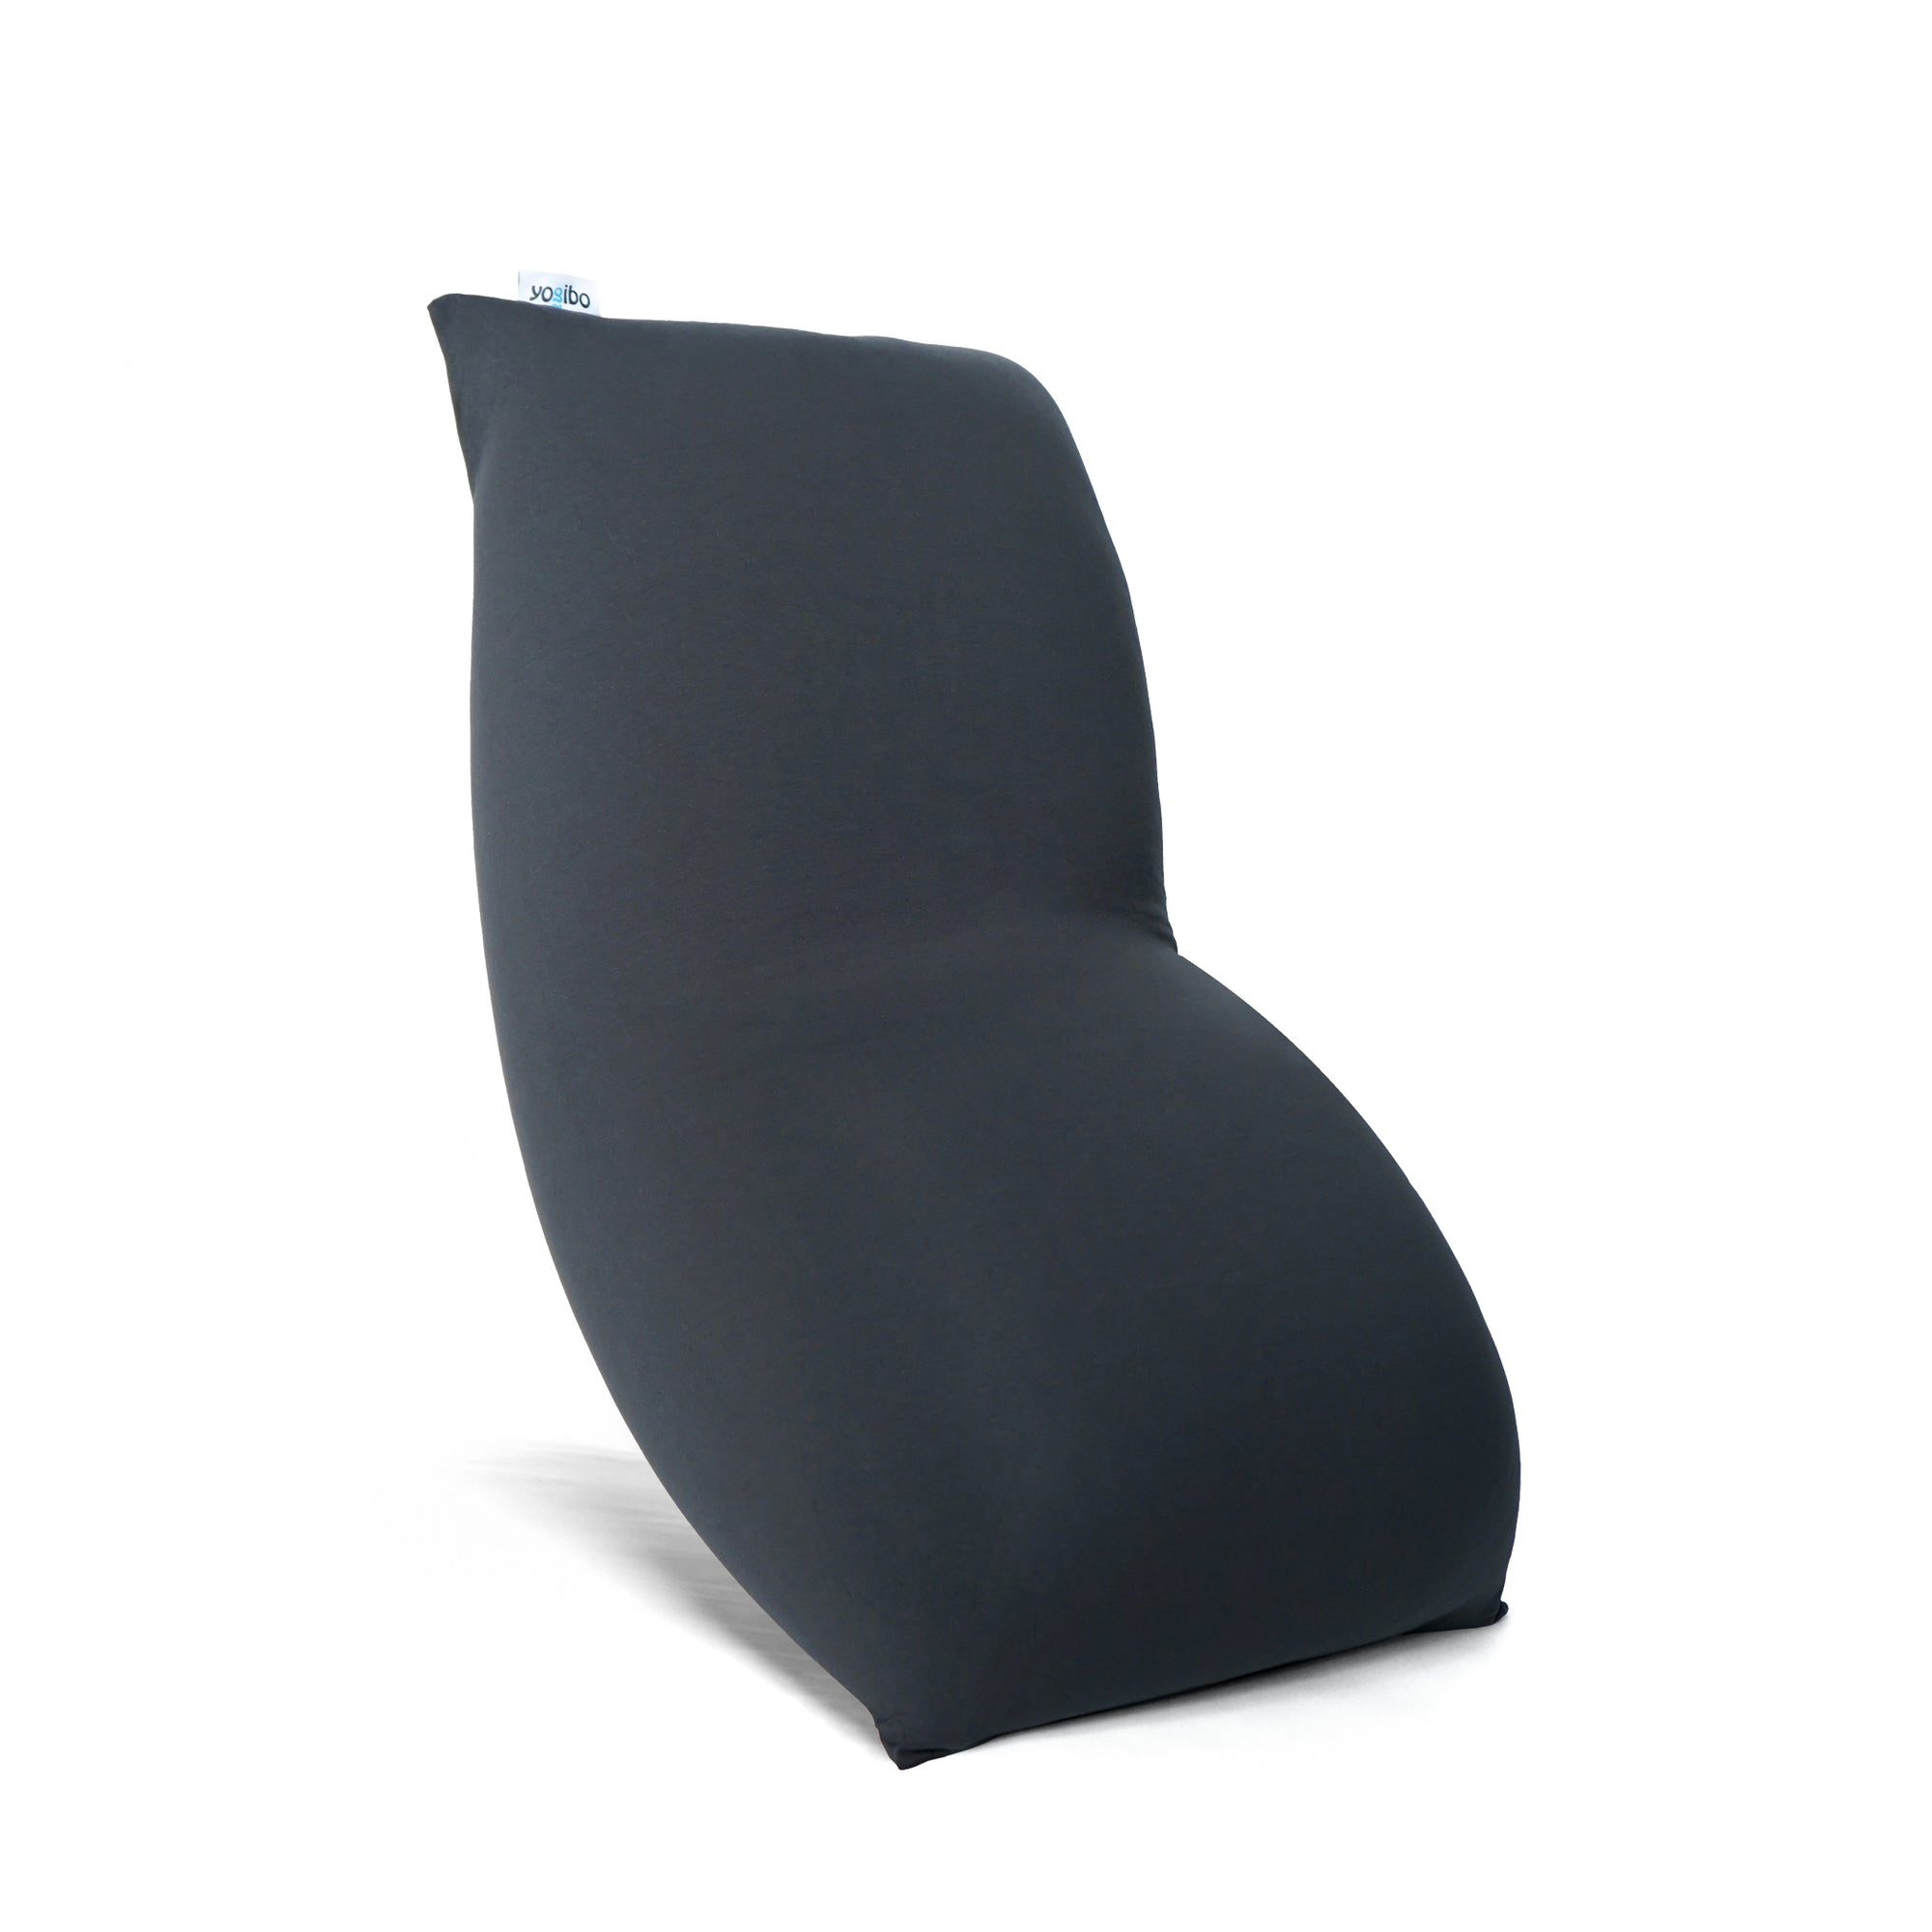 Yogibo Short - Medium Bean Bag Chair, Couch, Bed, & Recliner